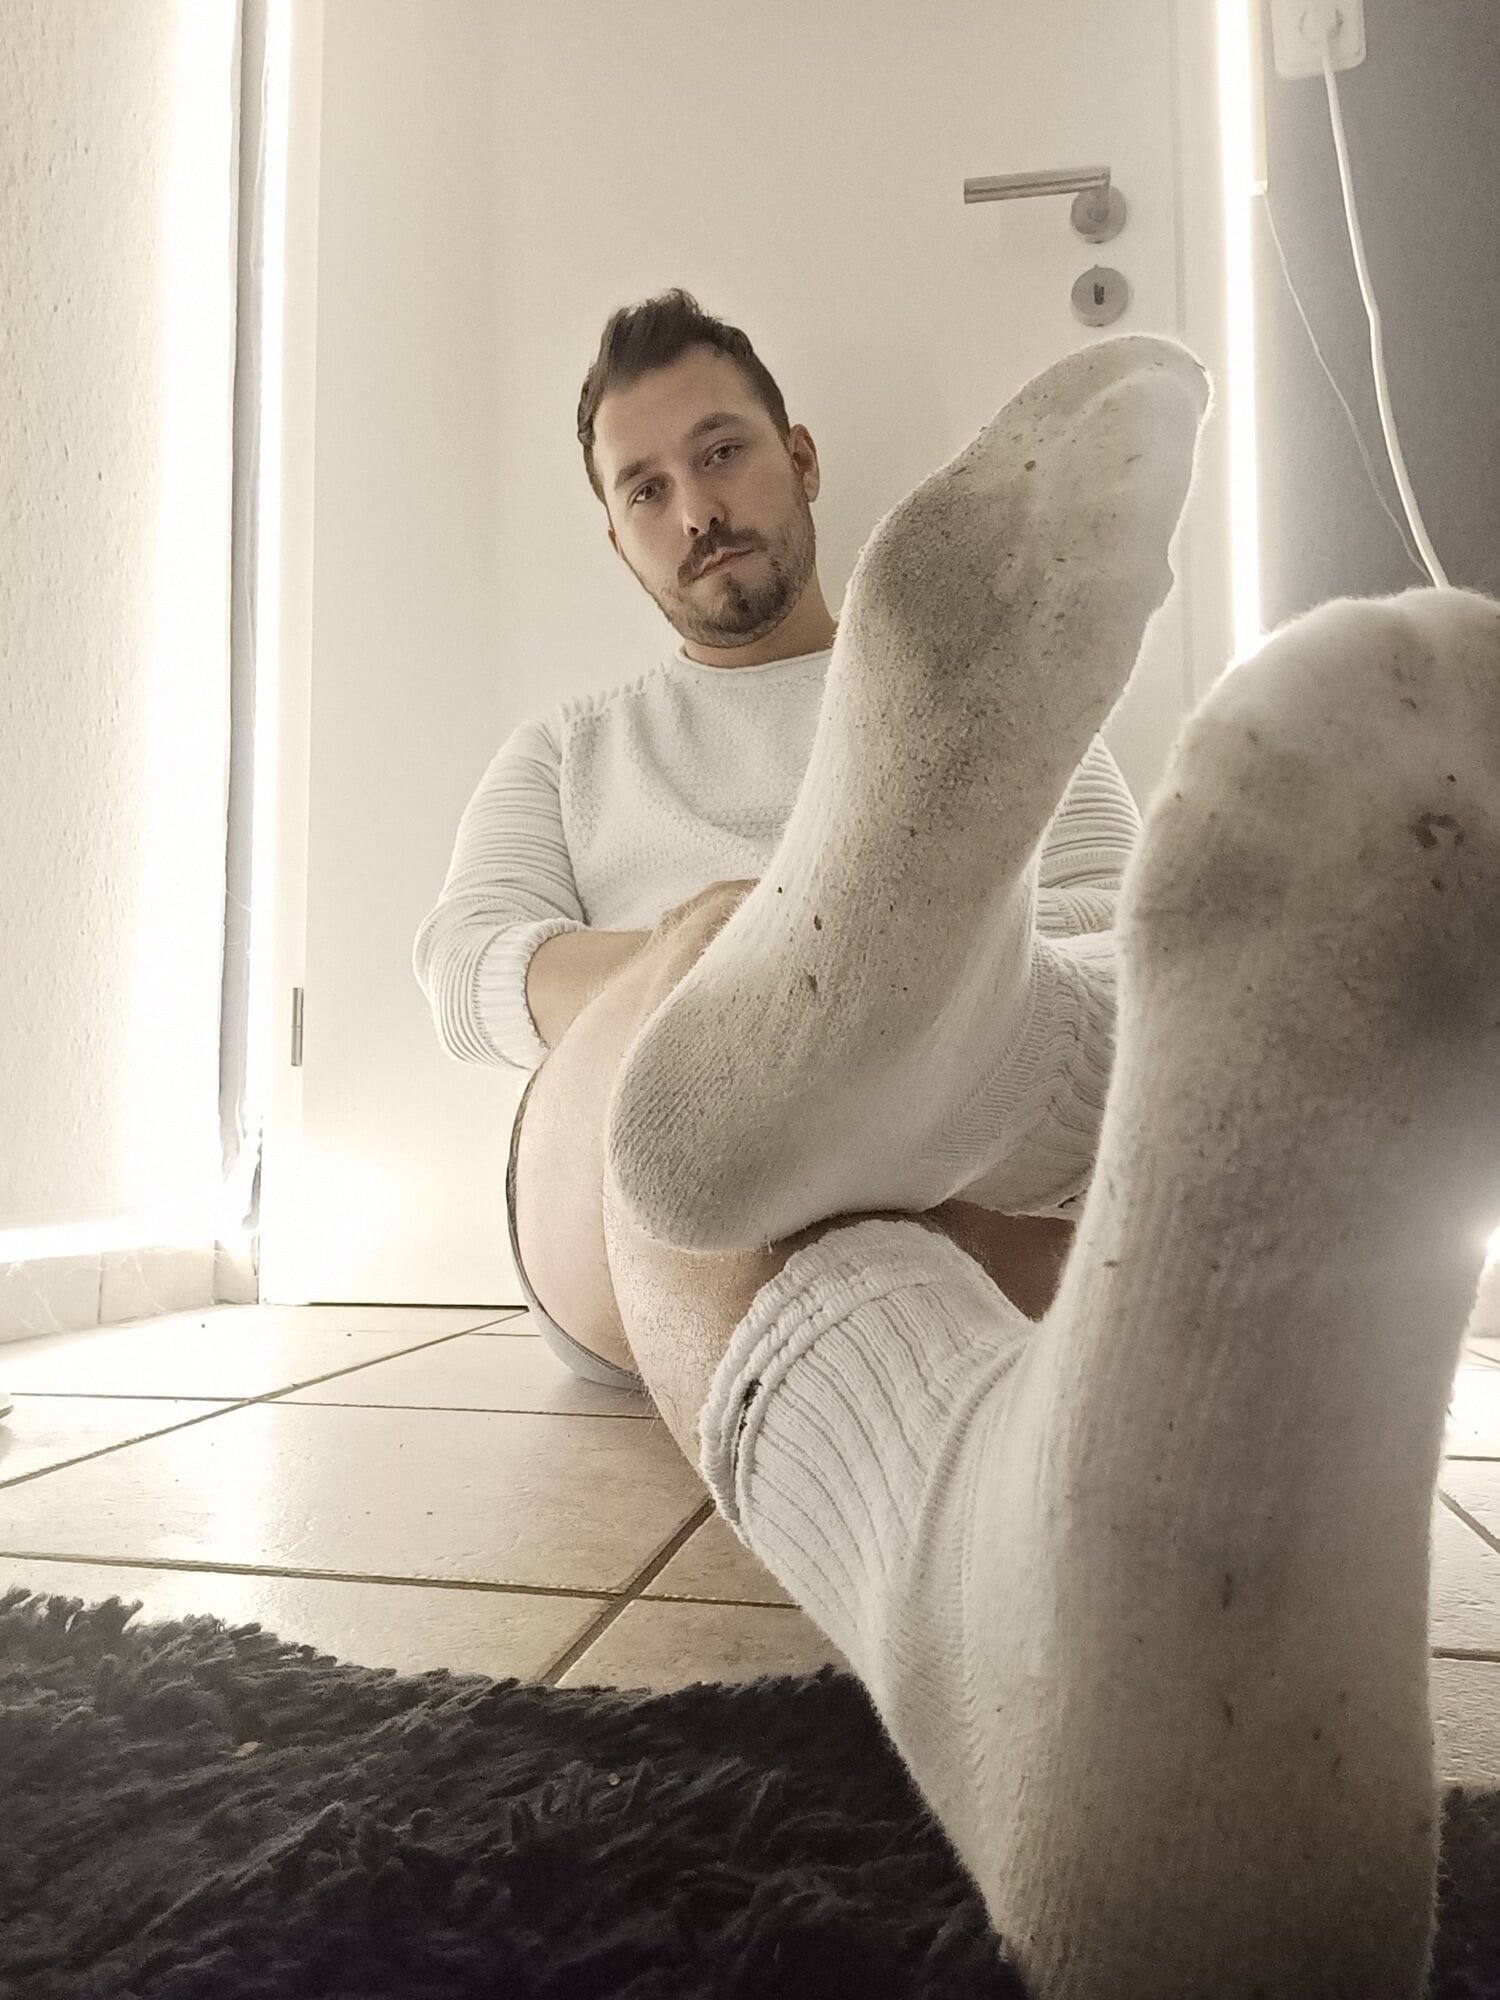 For feet and Socken Lovers 😜 #3